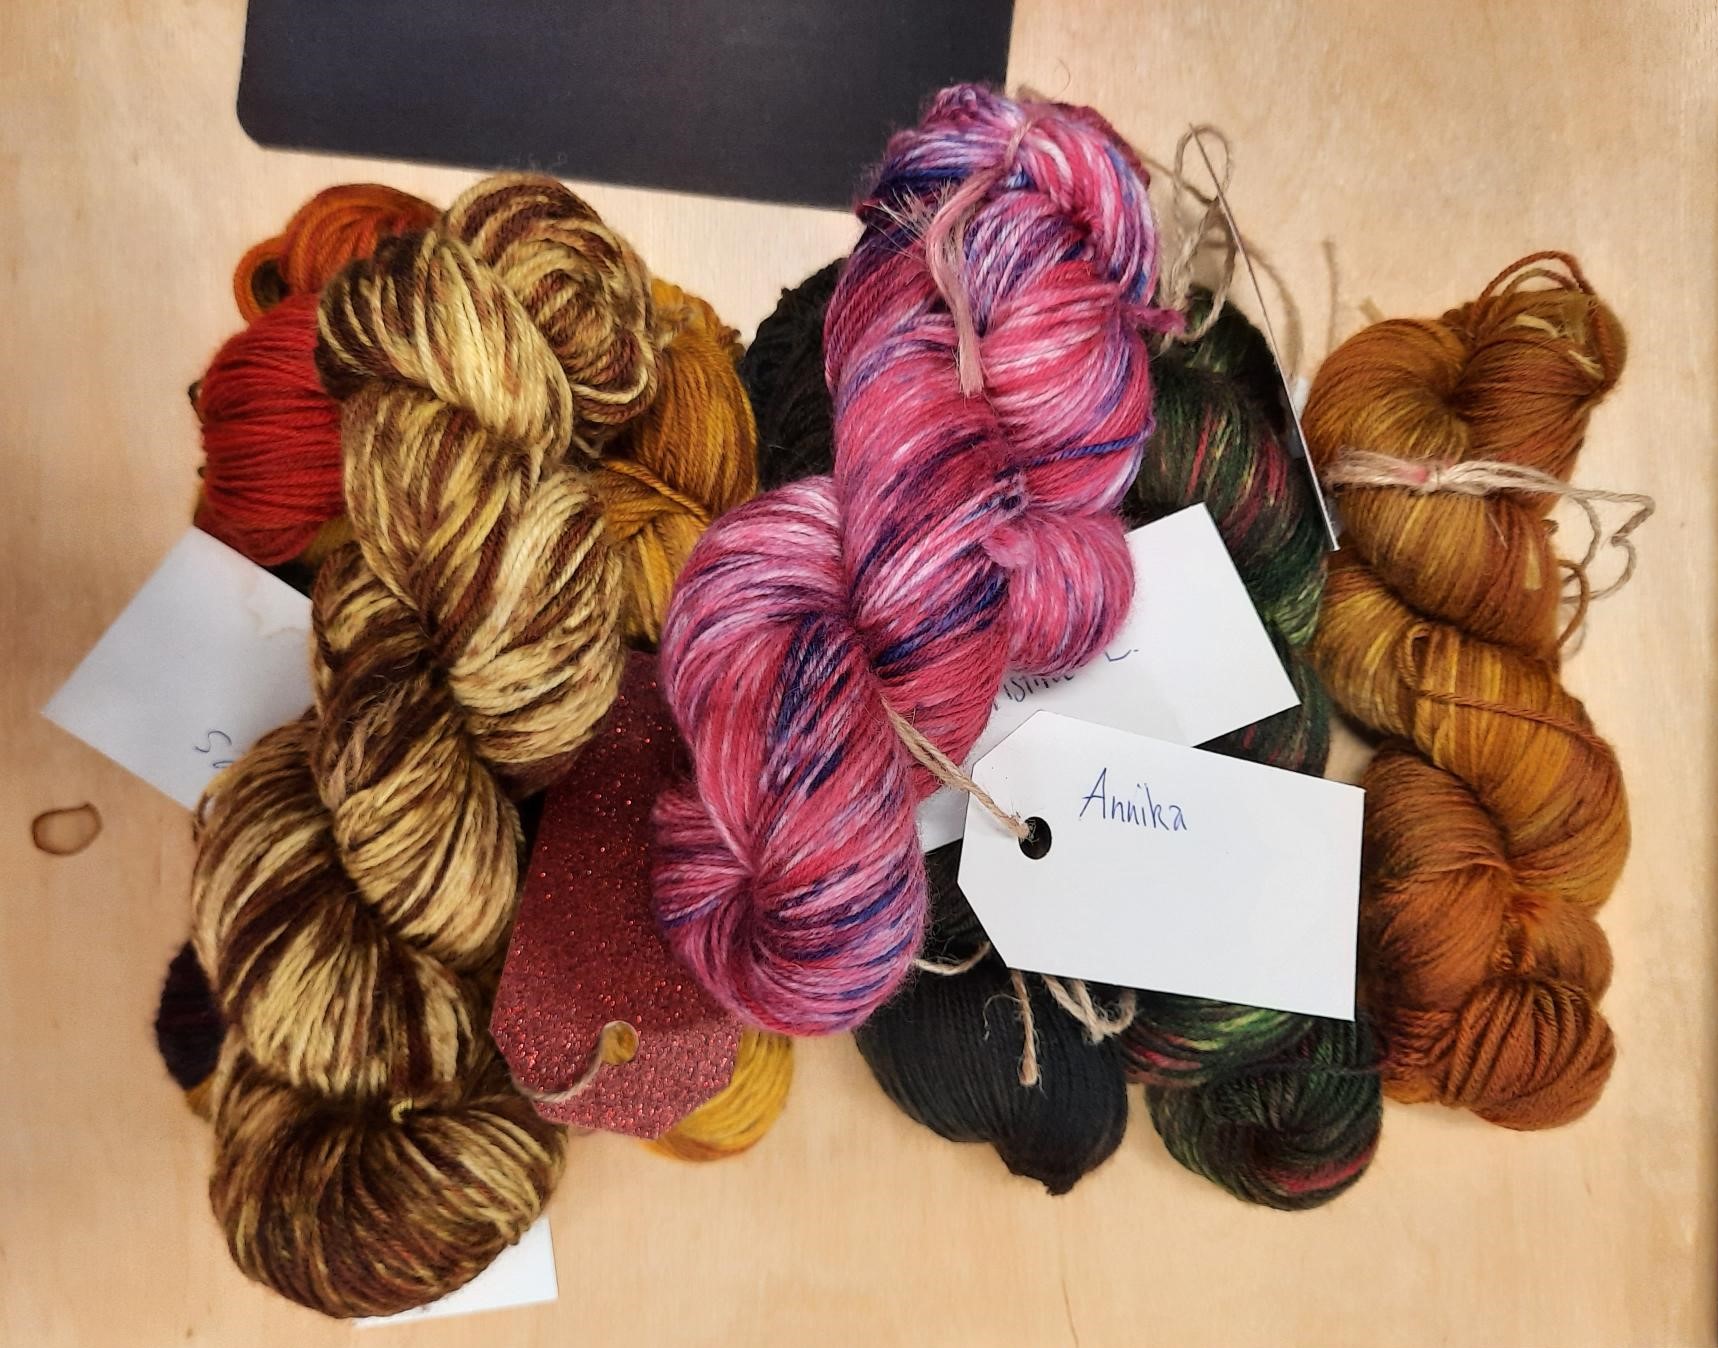 Learn to dye yarn: How to hand-dye your own yarn